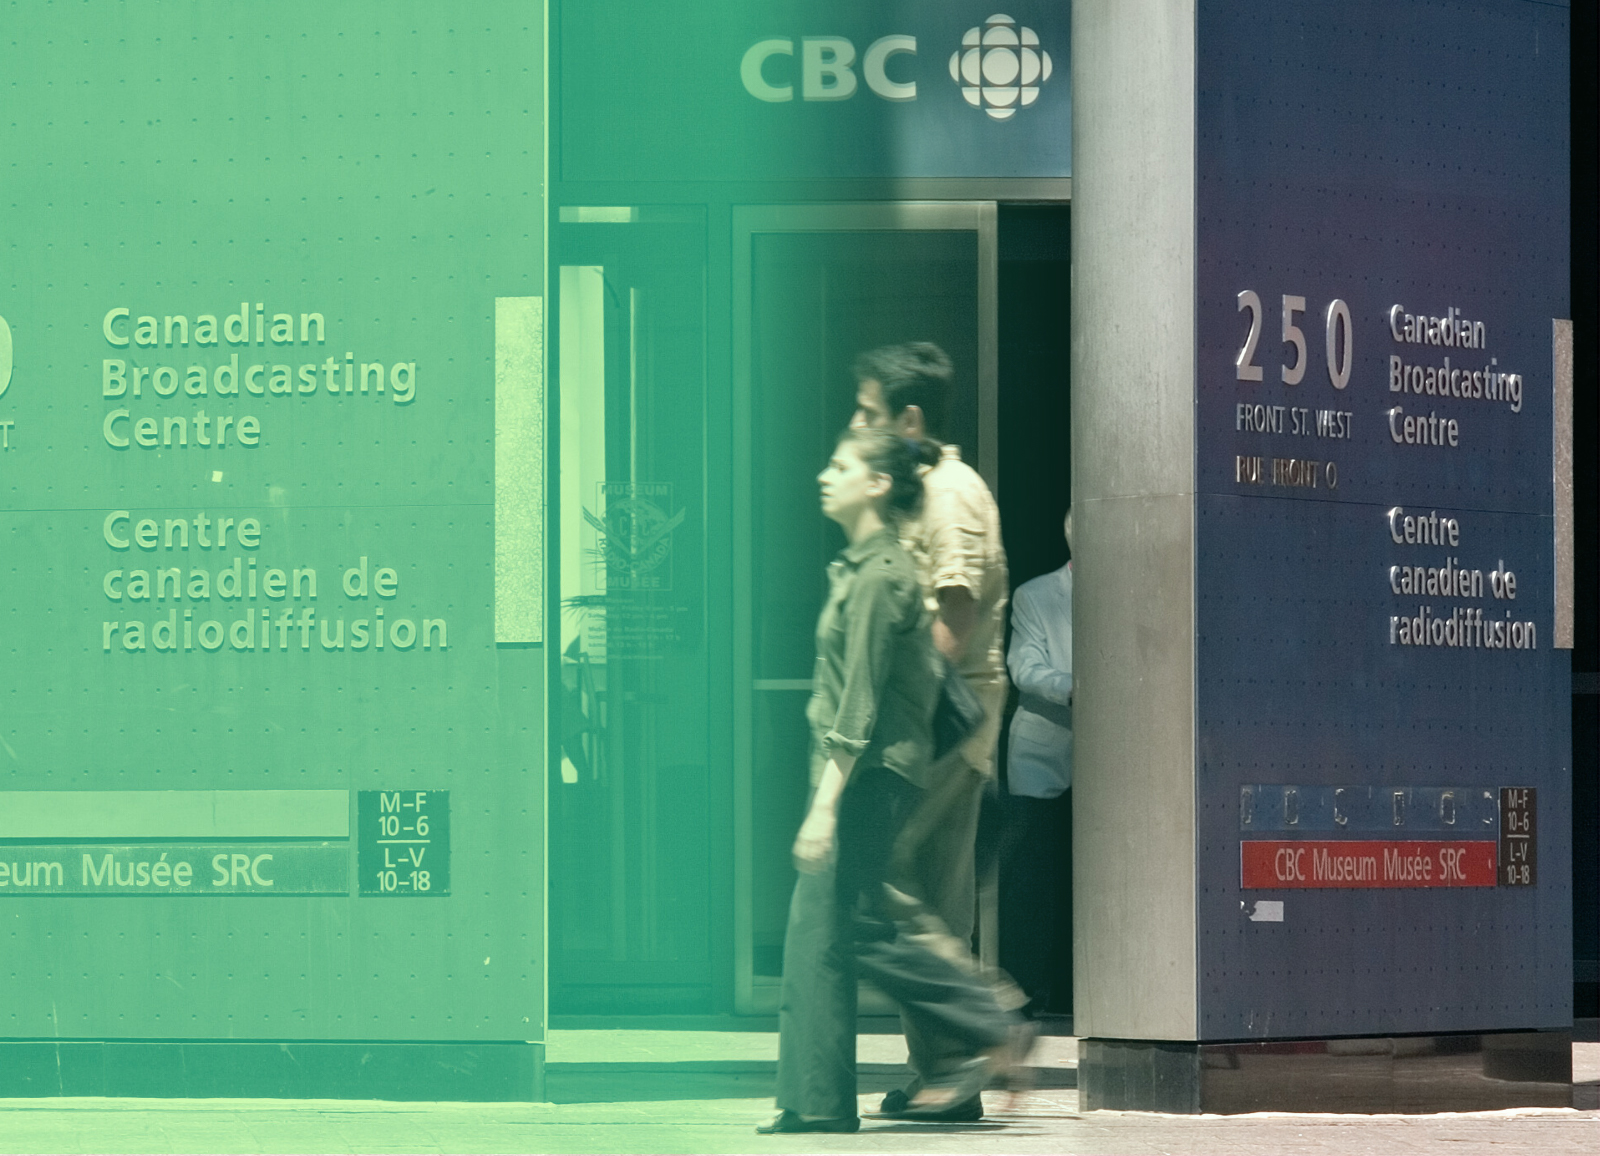 Le bâtiment de CBC/Radio Canada à Toronto - PHOTO AFP/Geoff ROBINS